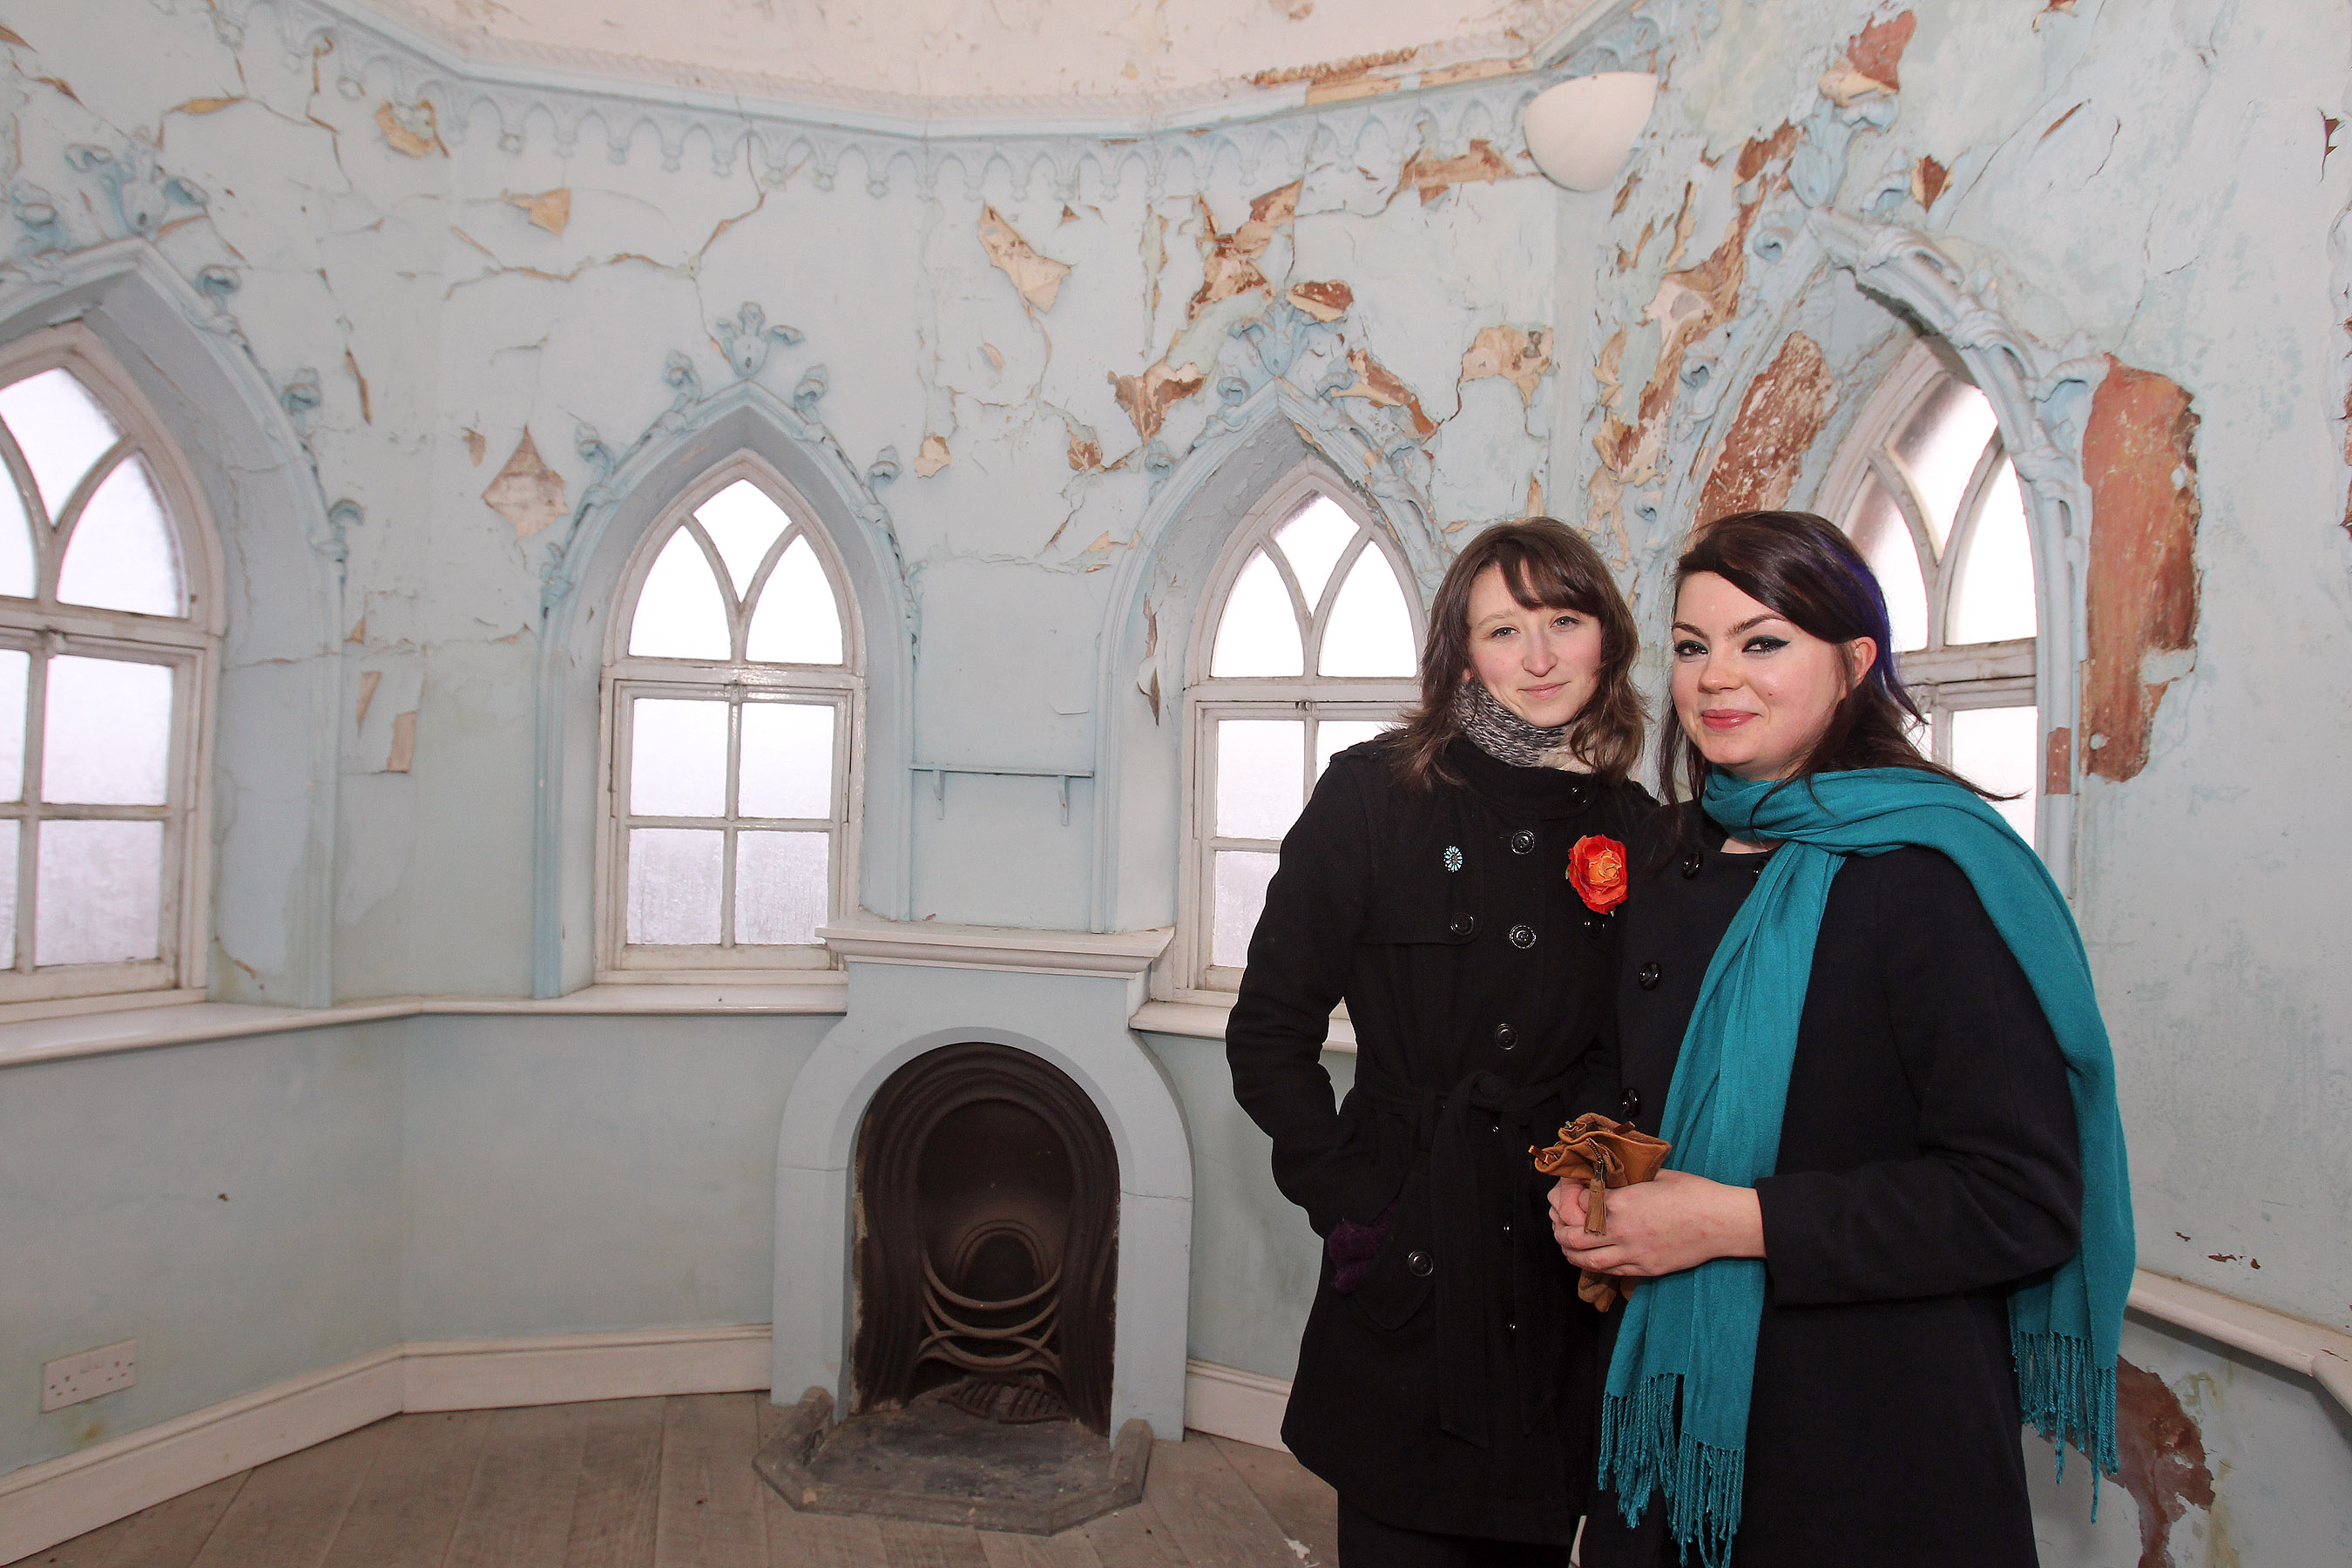 Artists Naomi Wood (left) and Elizabeth Jordan inside the imposing Perrott's Folly tower in Edgbaston